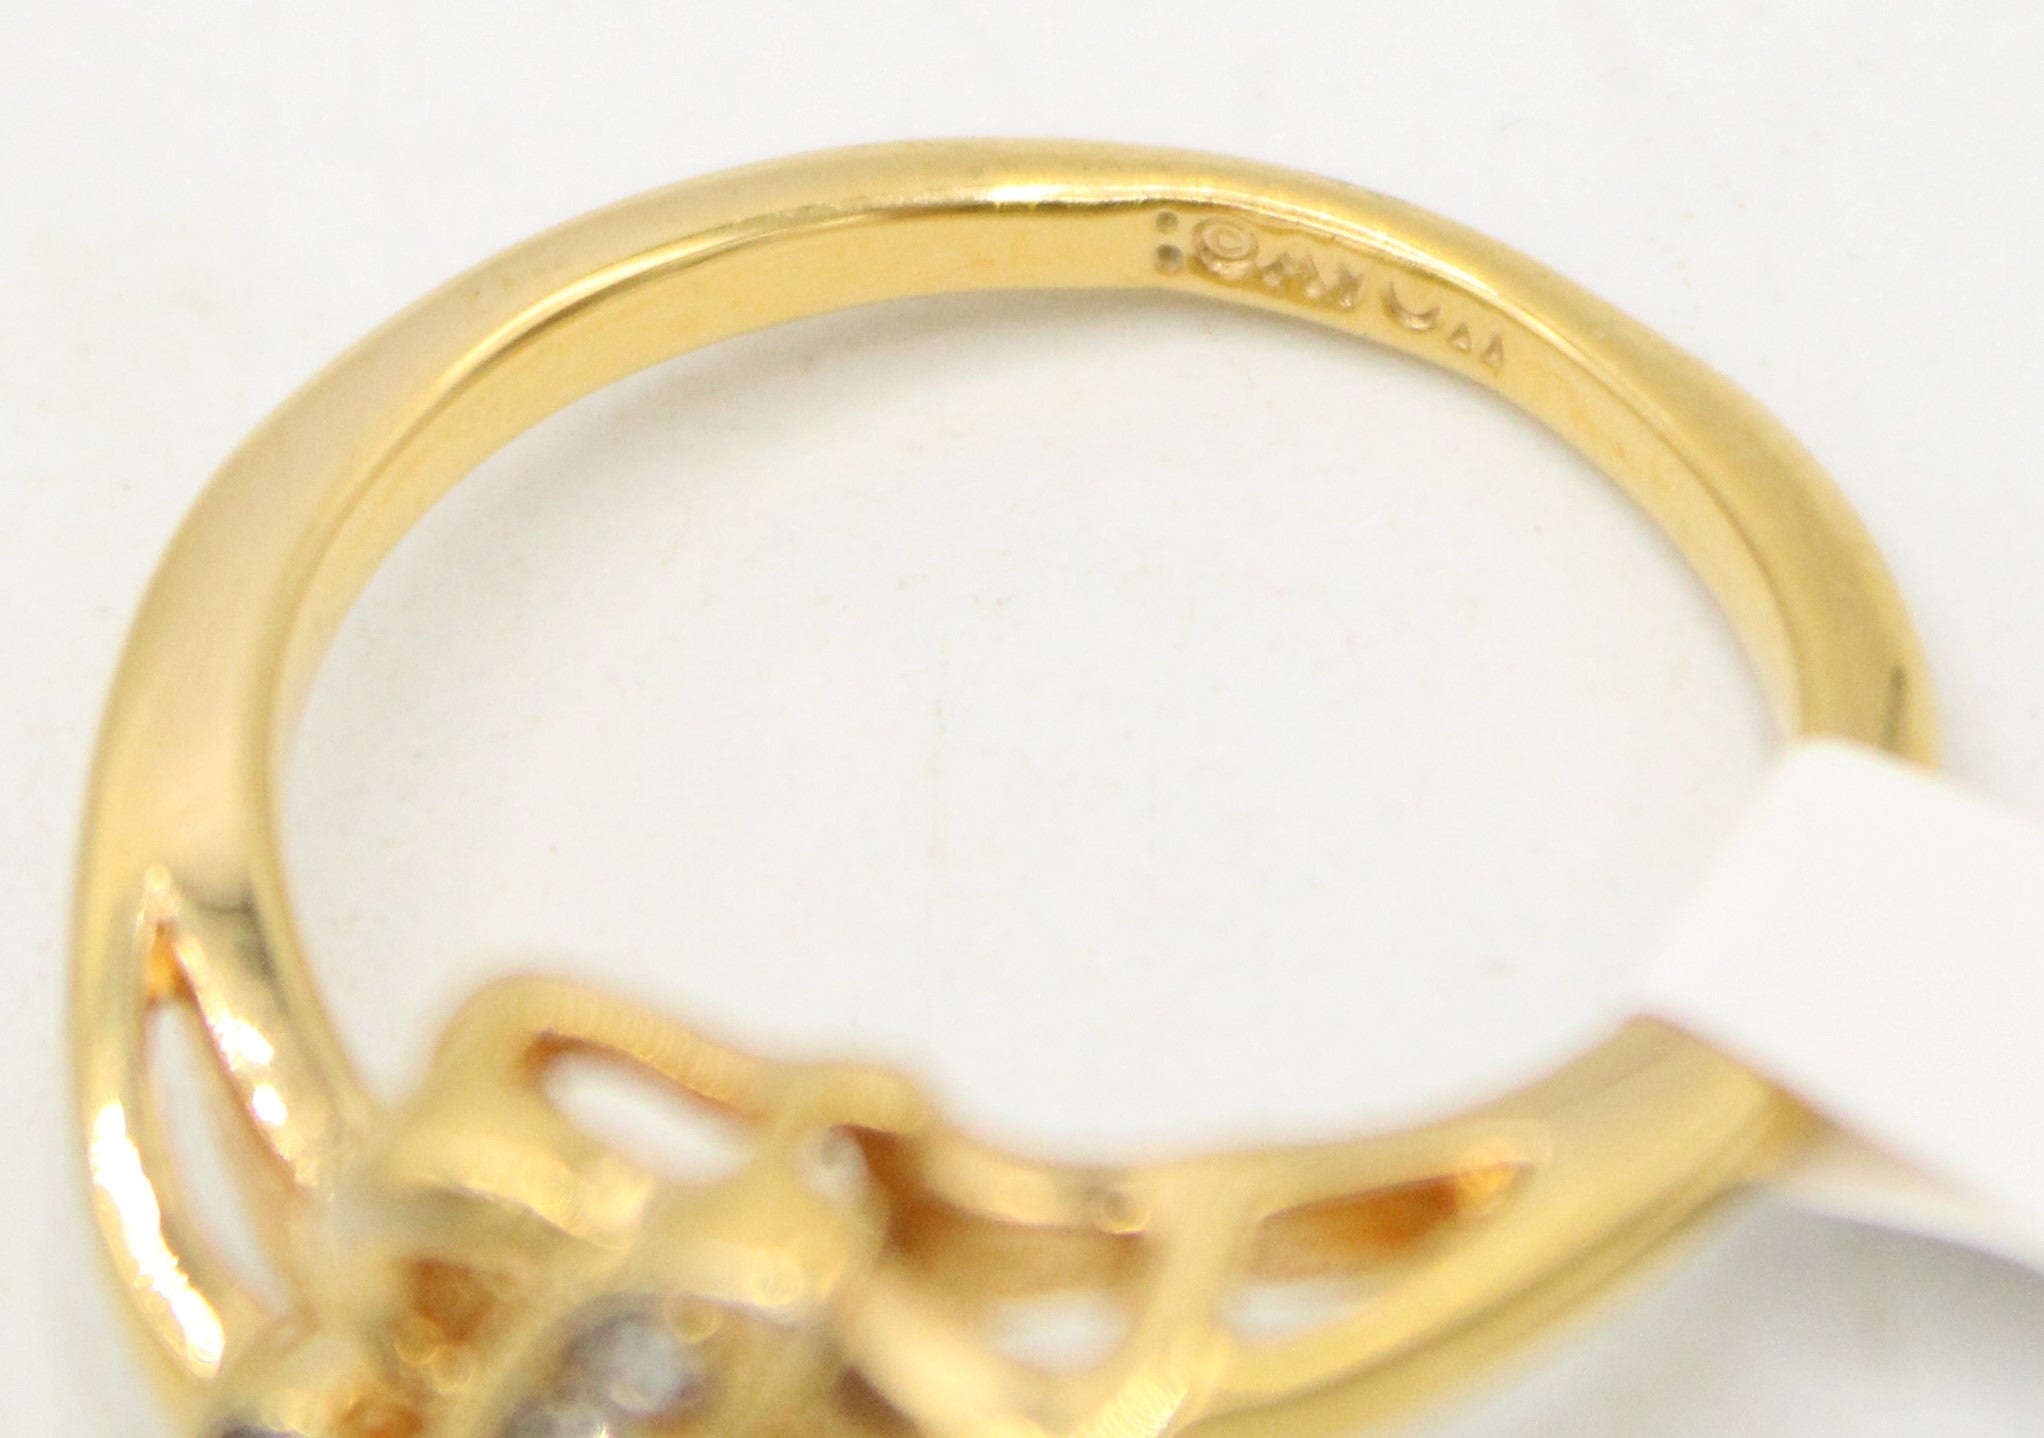 Avon "F" Initial Ring | Size 8